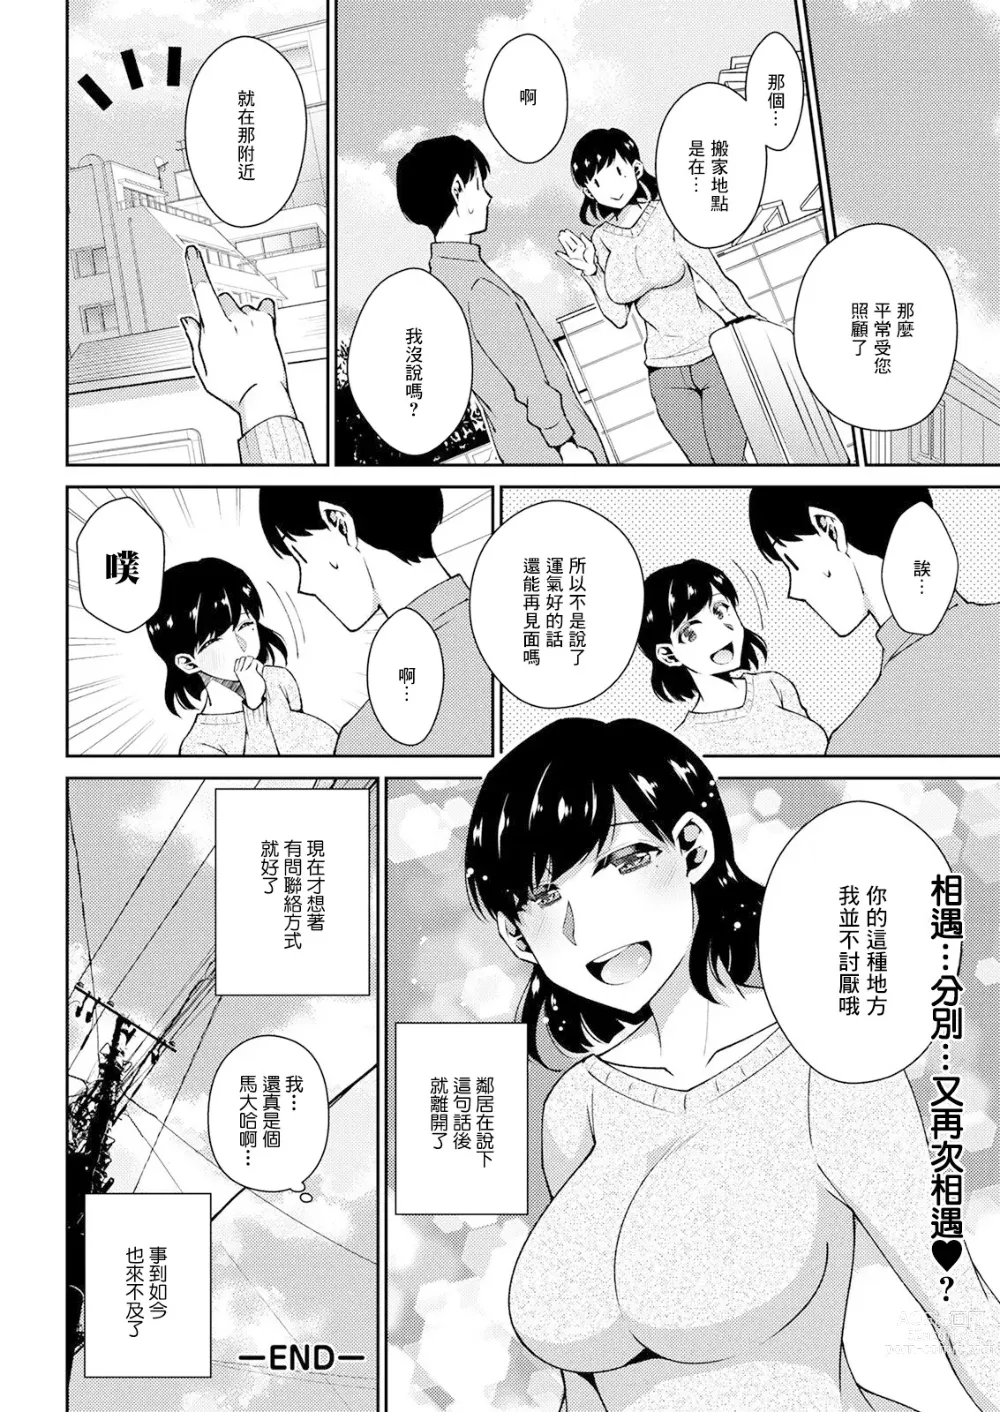 Page 18 of manga Hisureba Rinjin